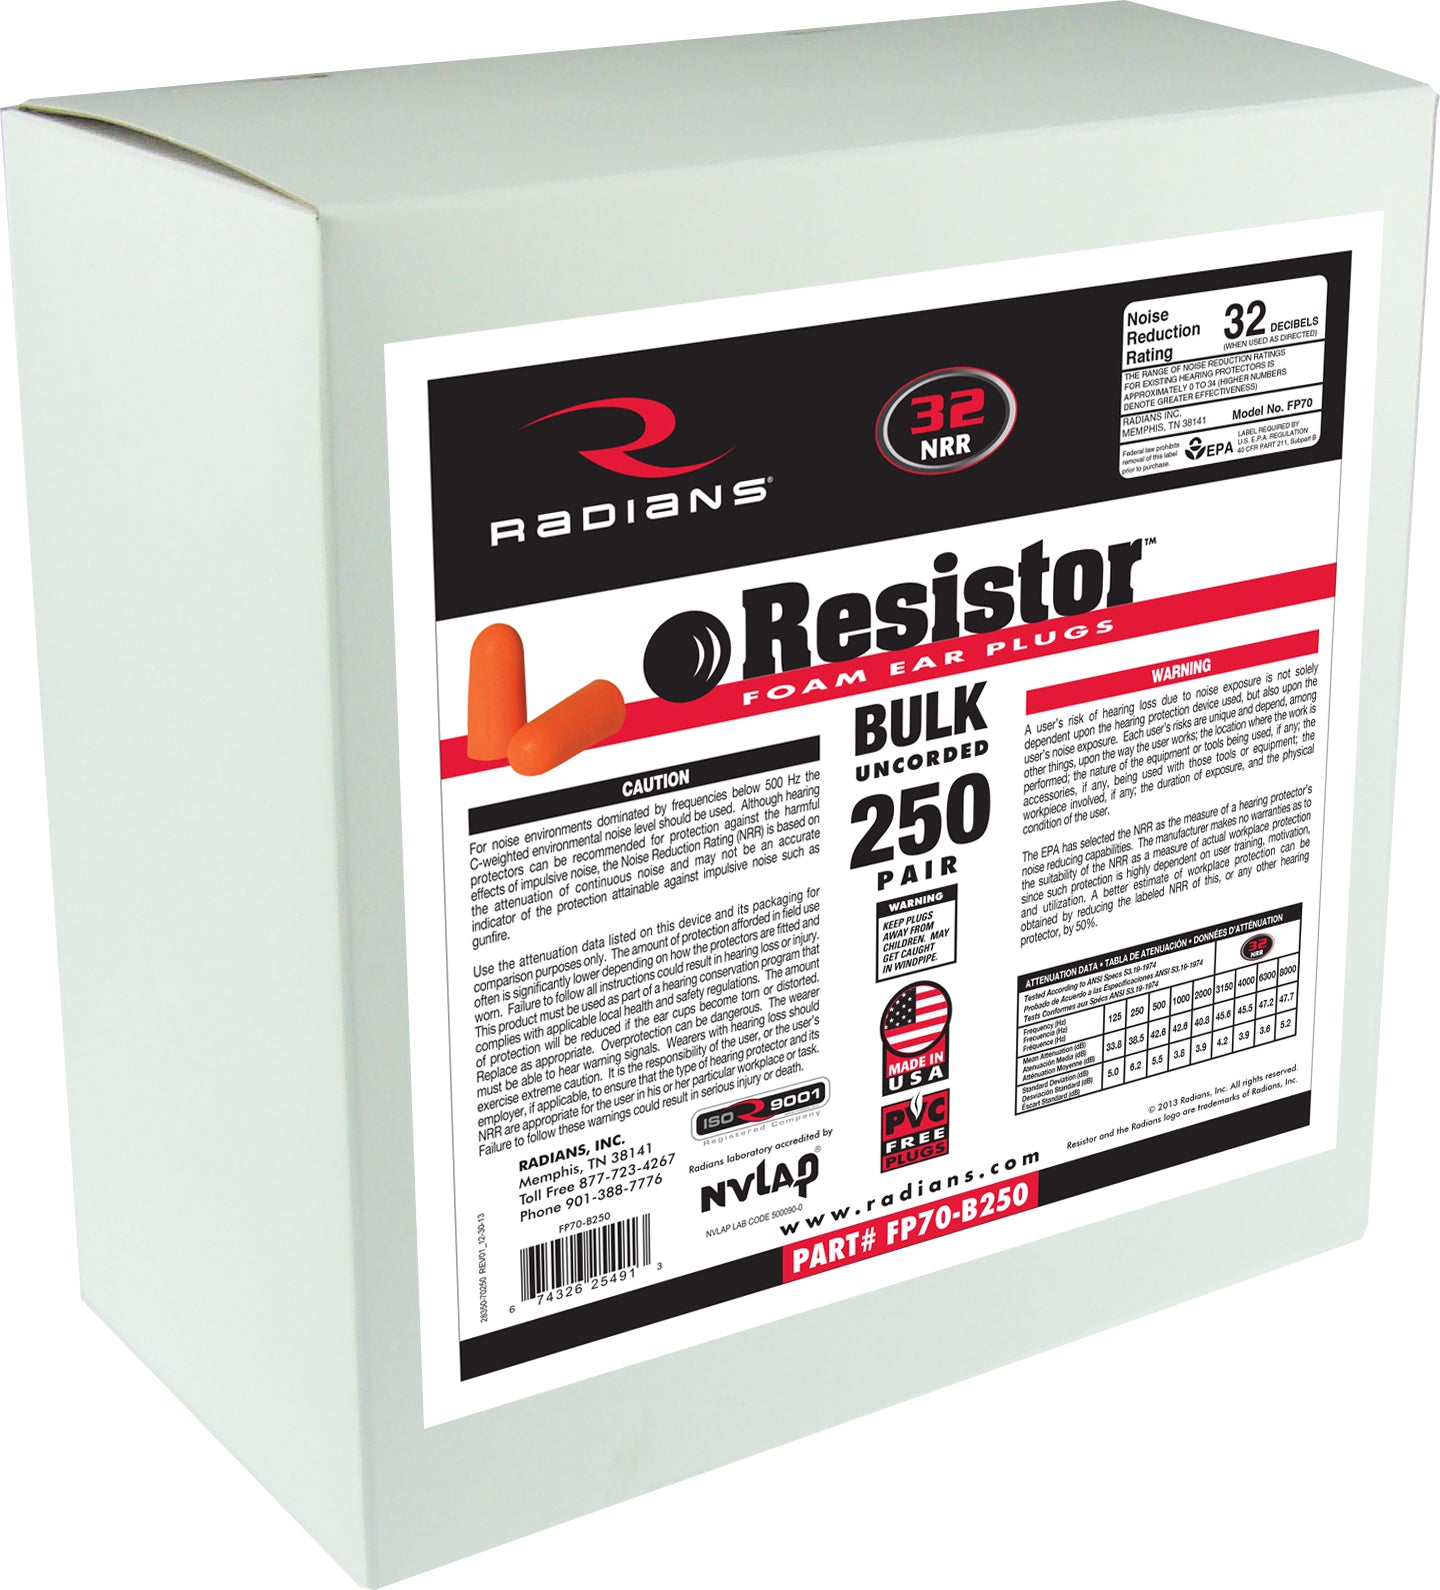 Image of Radians Resistor 32 Foam Uncorded Earplug Dispenser Refill